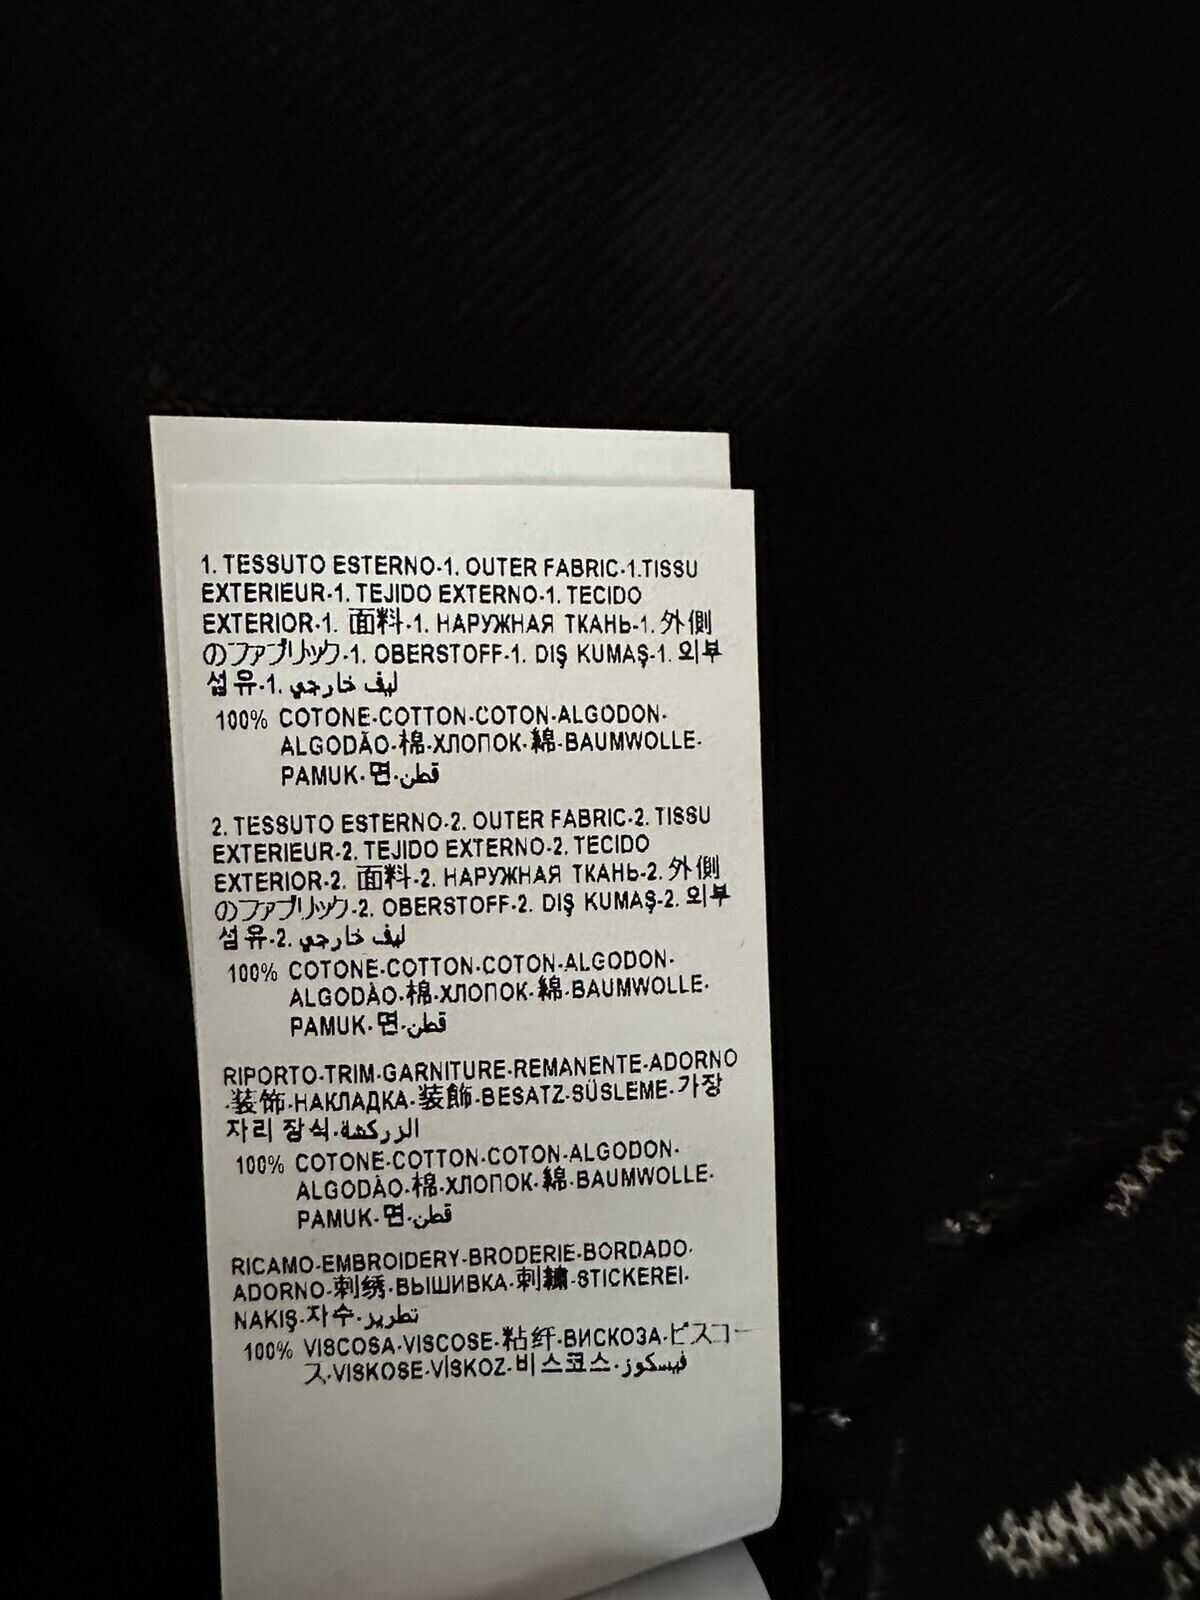 NWT $650 Versace Piquet Fabric Black/White Polo Cotton Jersey Shirt 4XL 1002755